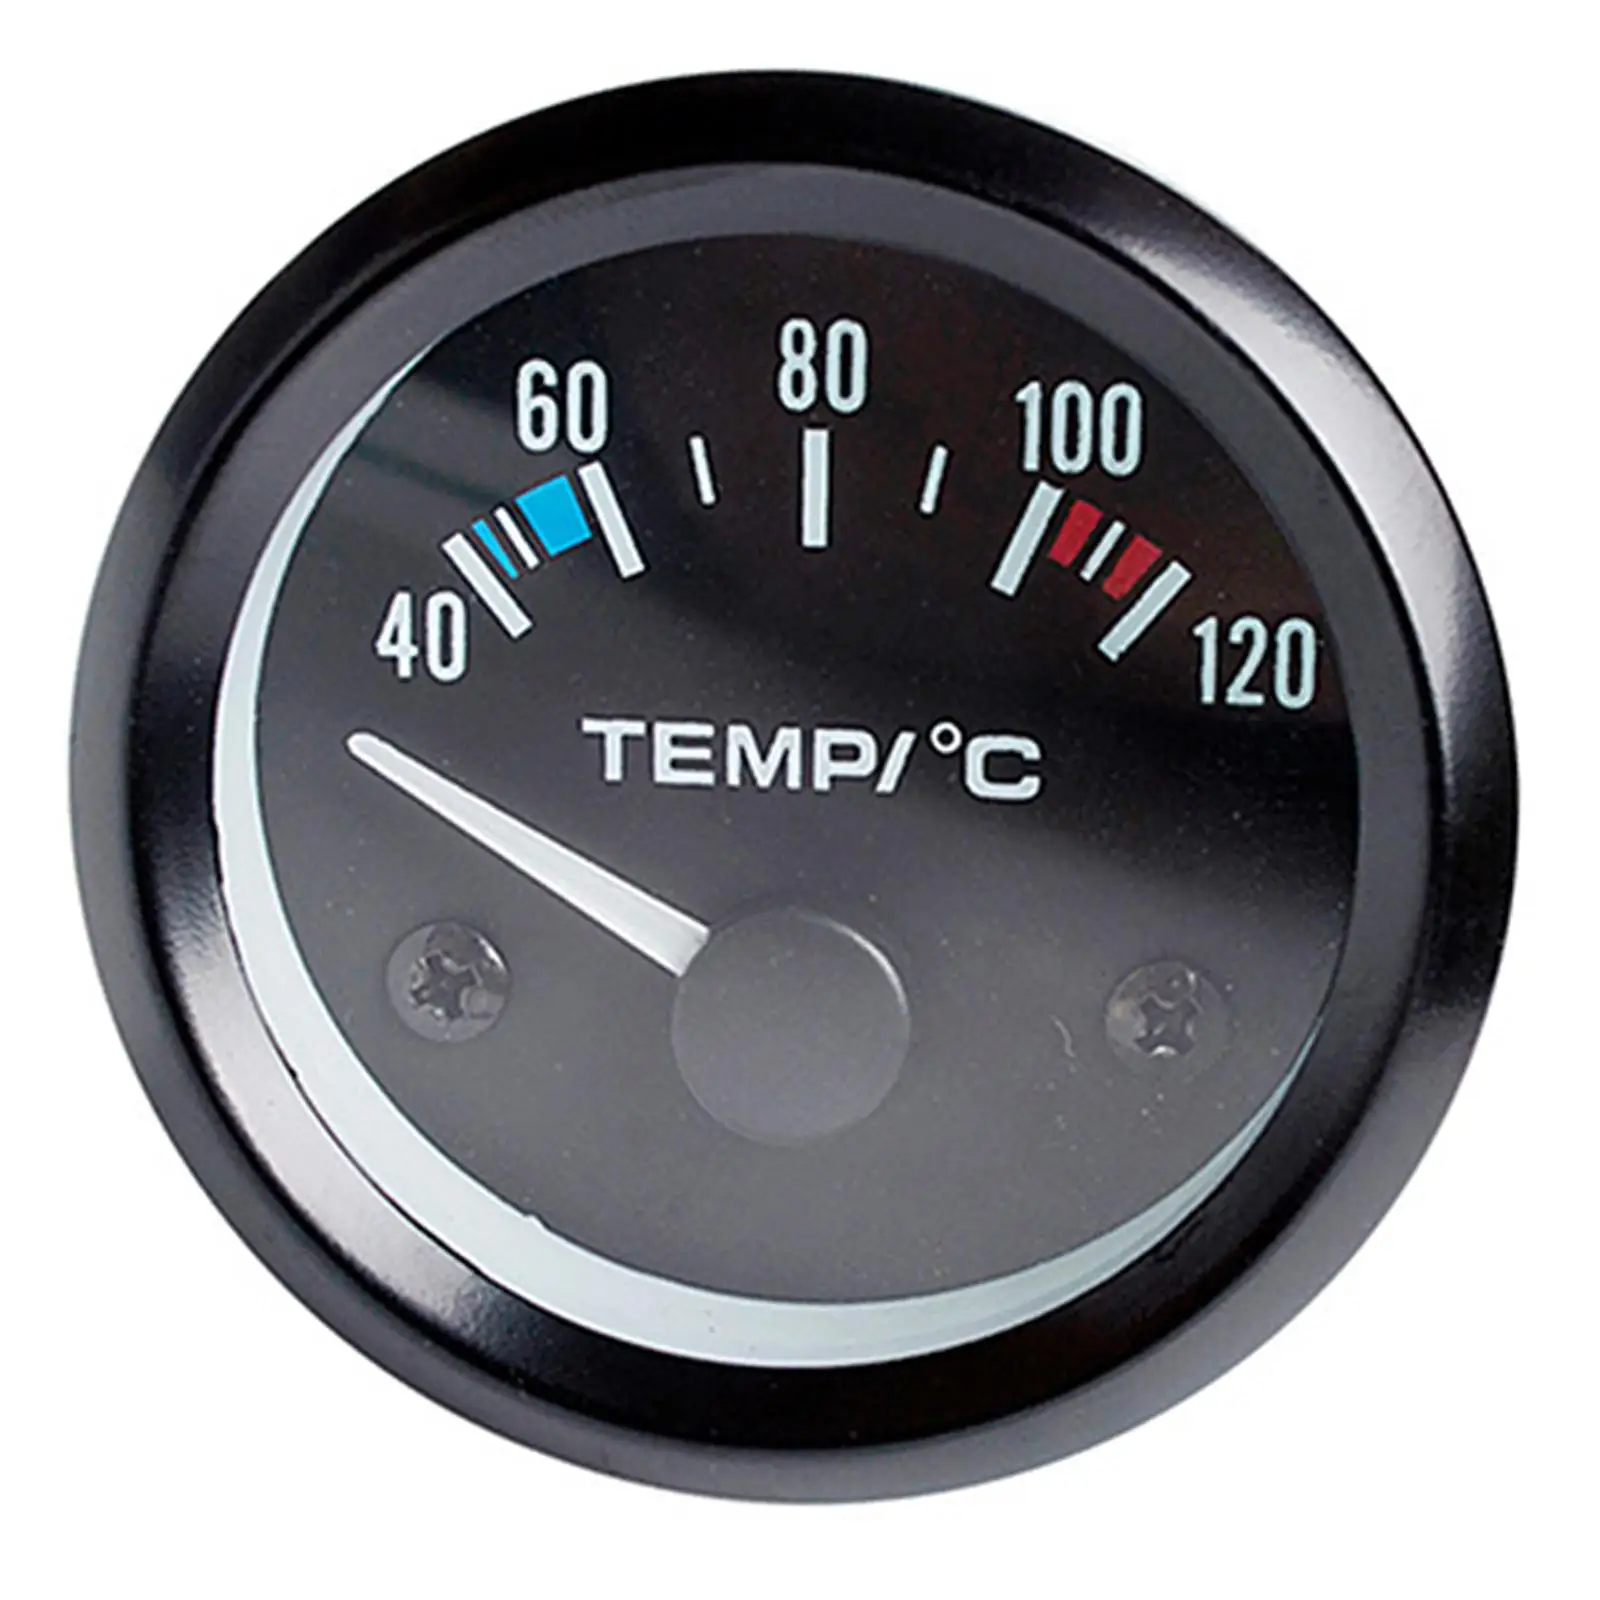 Water Temperature Gauge Premium High Performance Temperature Meter Water Temp Gauge for Automotive Auto Truck Car Vehicle